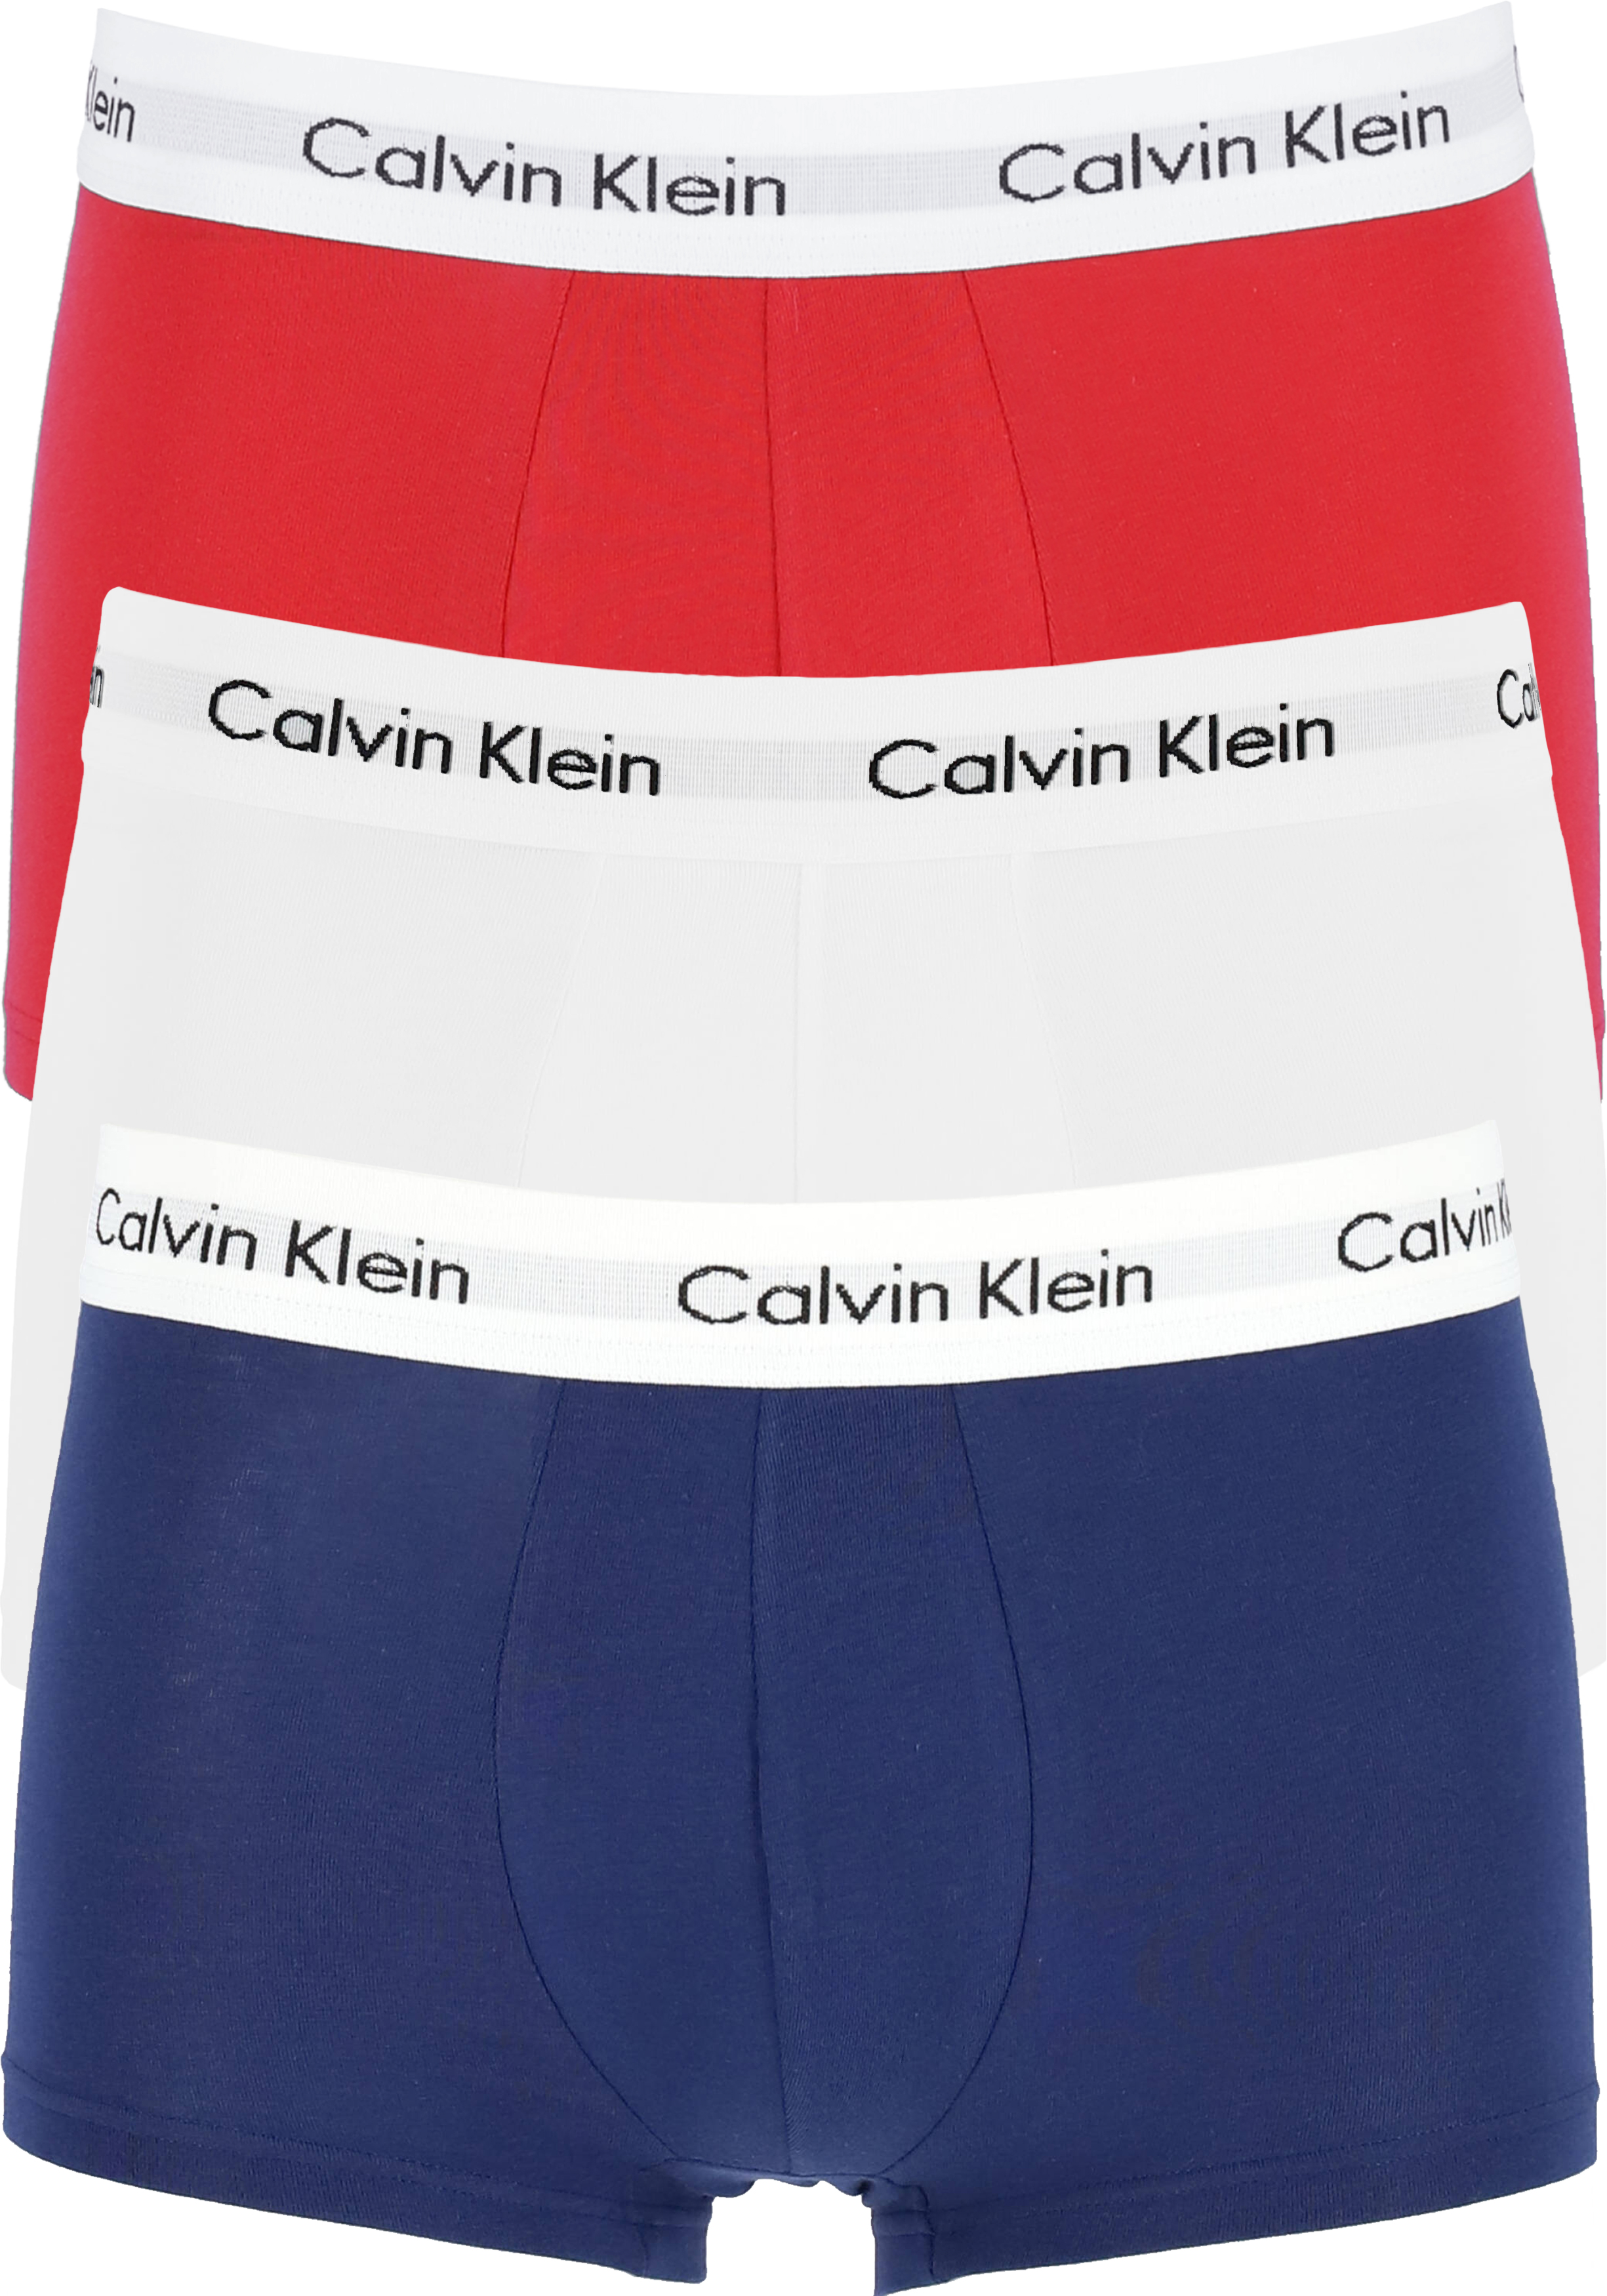 Calvin Klein low rise trunks (3-pack), lage heren boxers kort, rood, wit en blauw